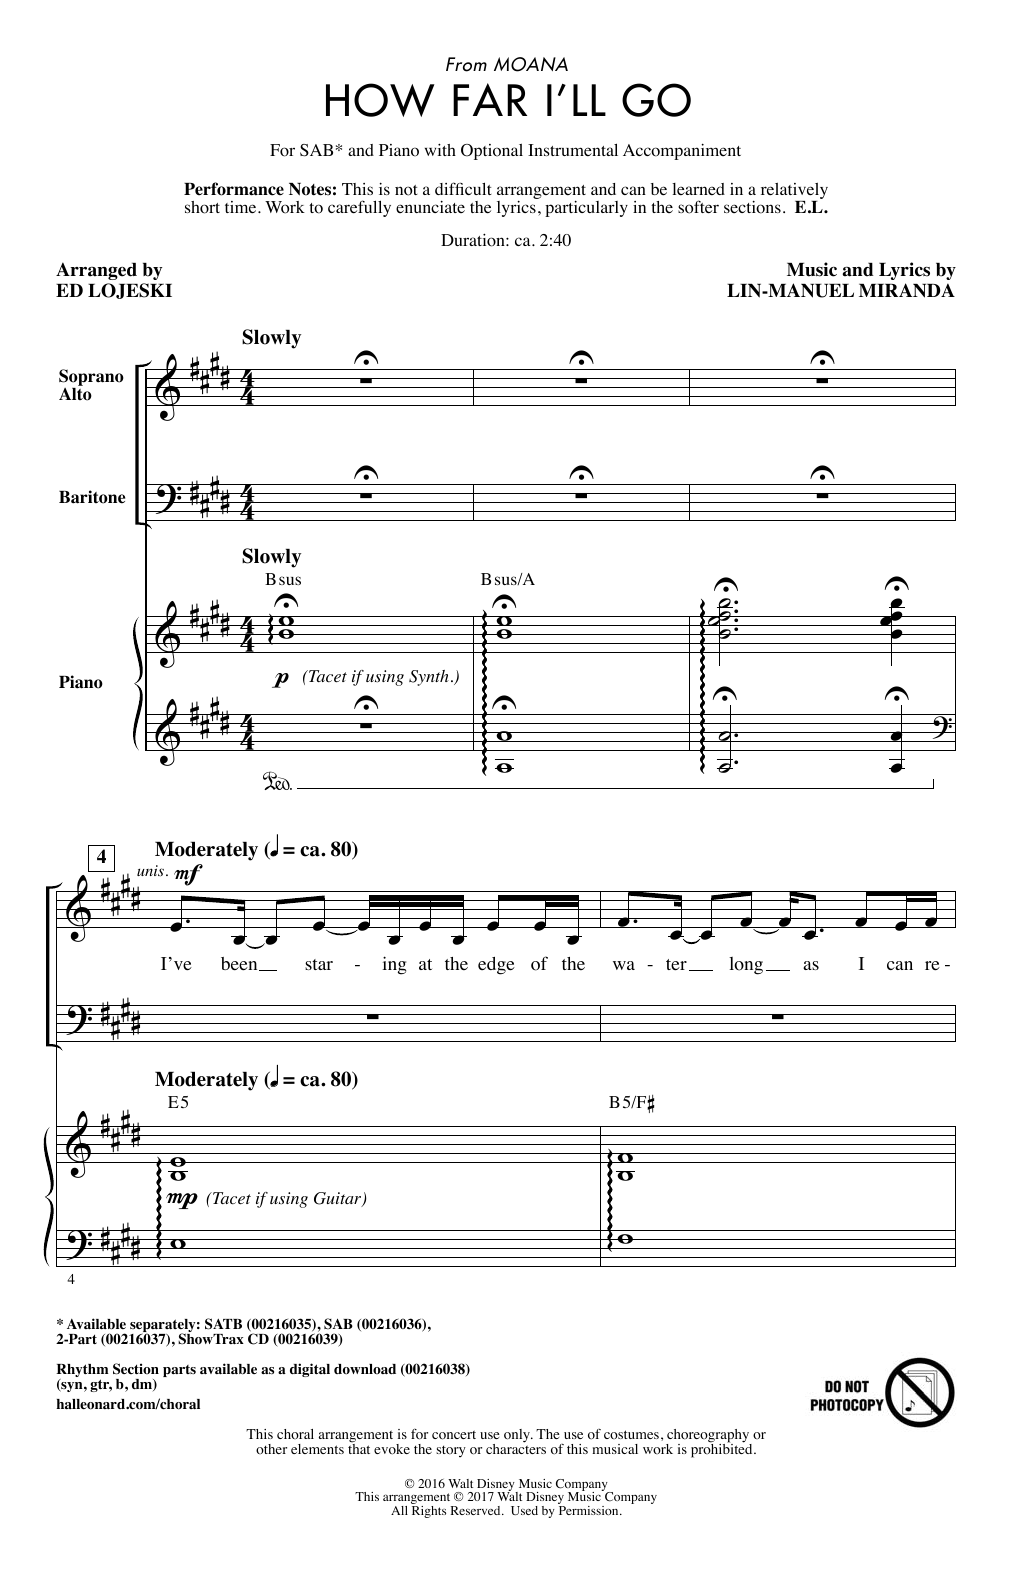 Lin-Manuel Miranda How Far I'll Go (from Moana) (arr. Ed Lojeski) Sheet Music Notes & Chords for SAB - Download or Print PDF